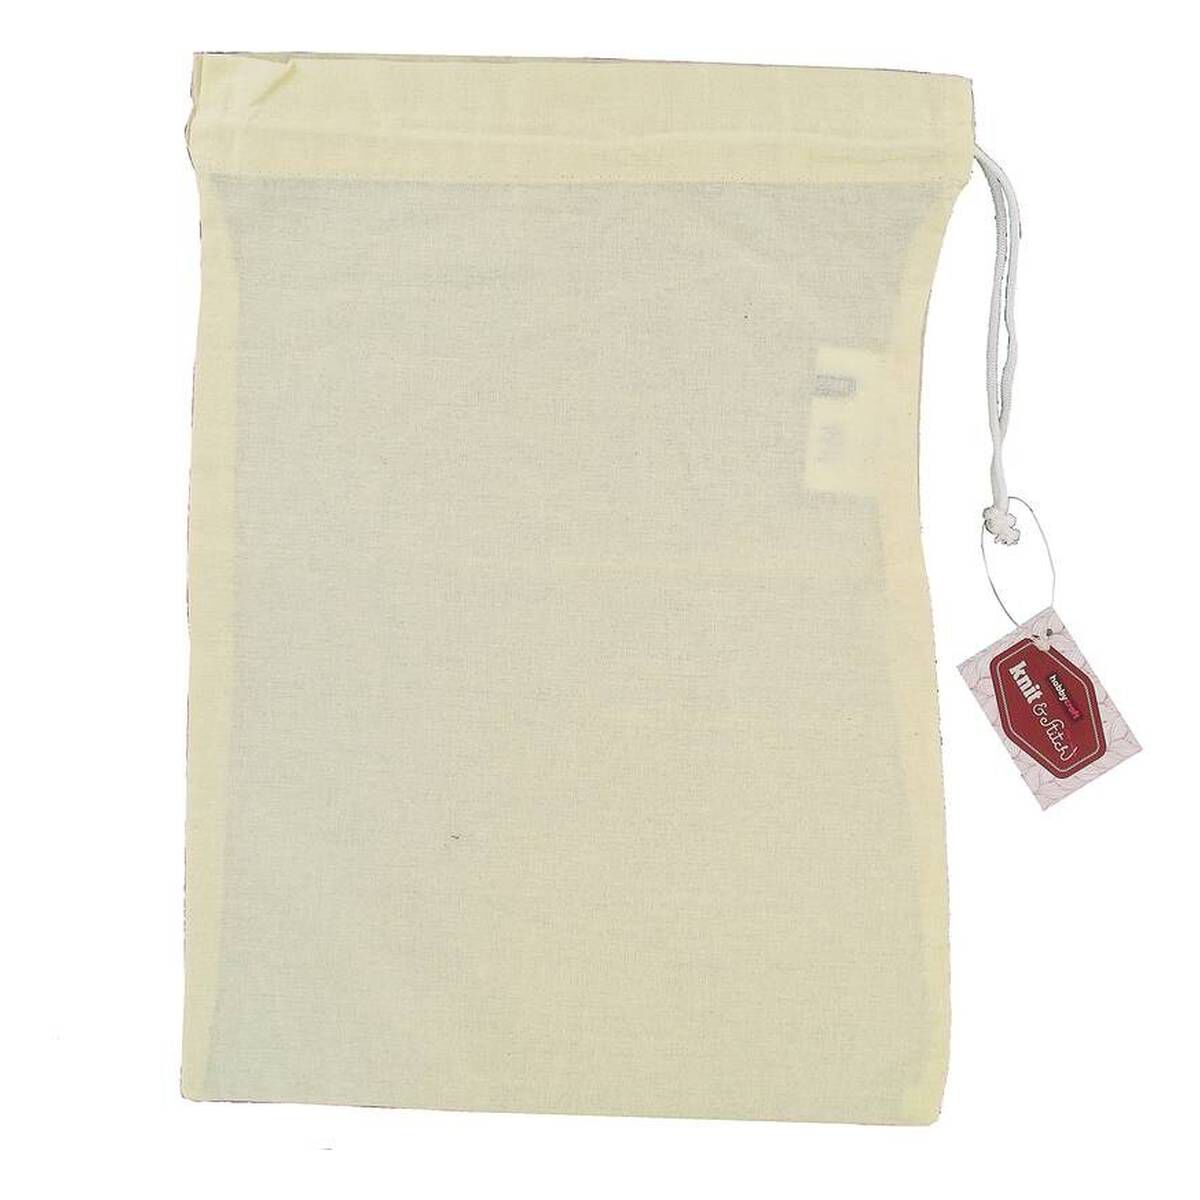 Buy IWORK - Cotton Vegetables Bags Set of 11 Pcs - One White Plain Canvas  Bag 14